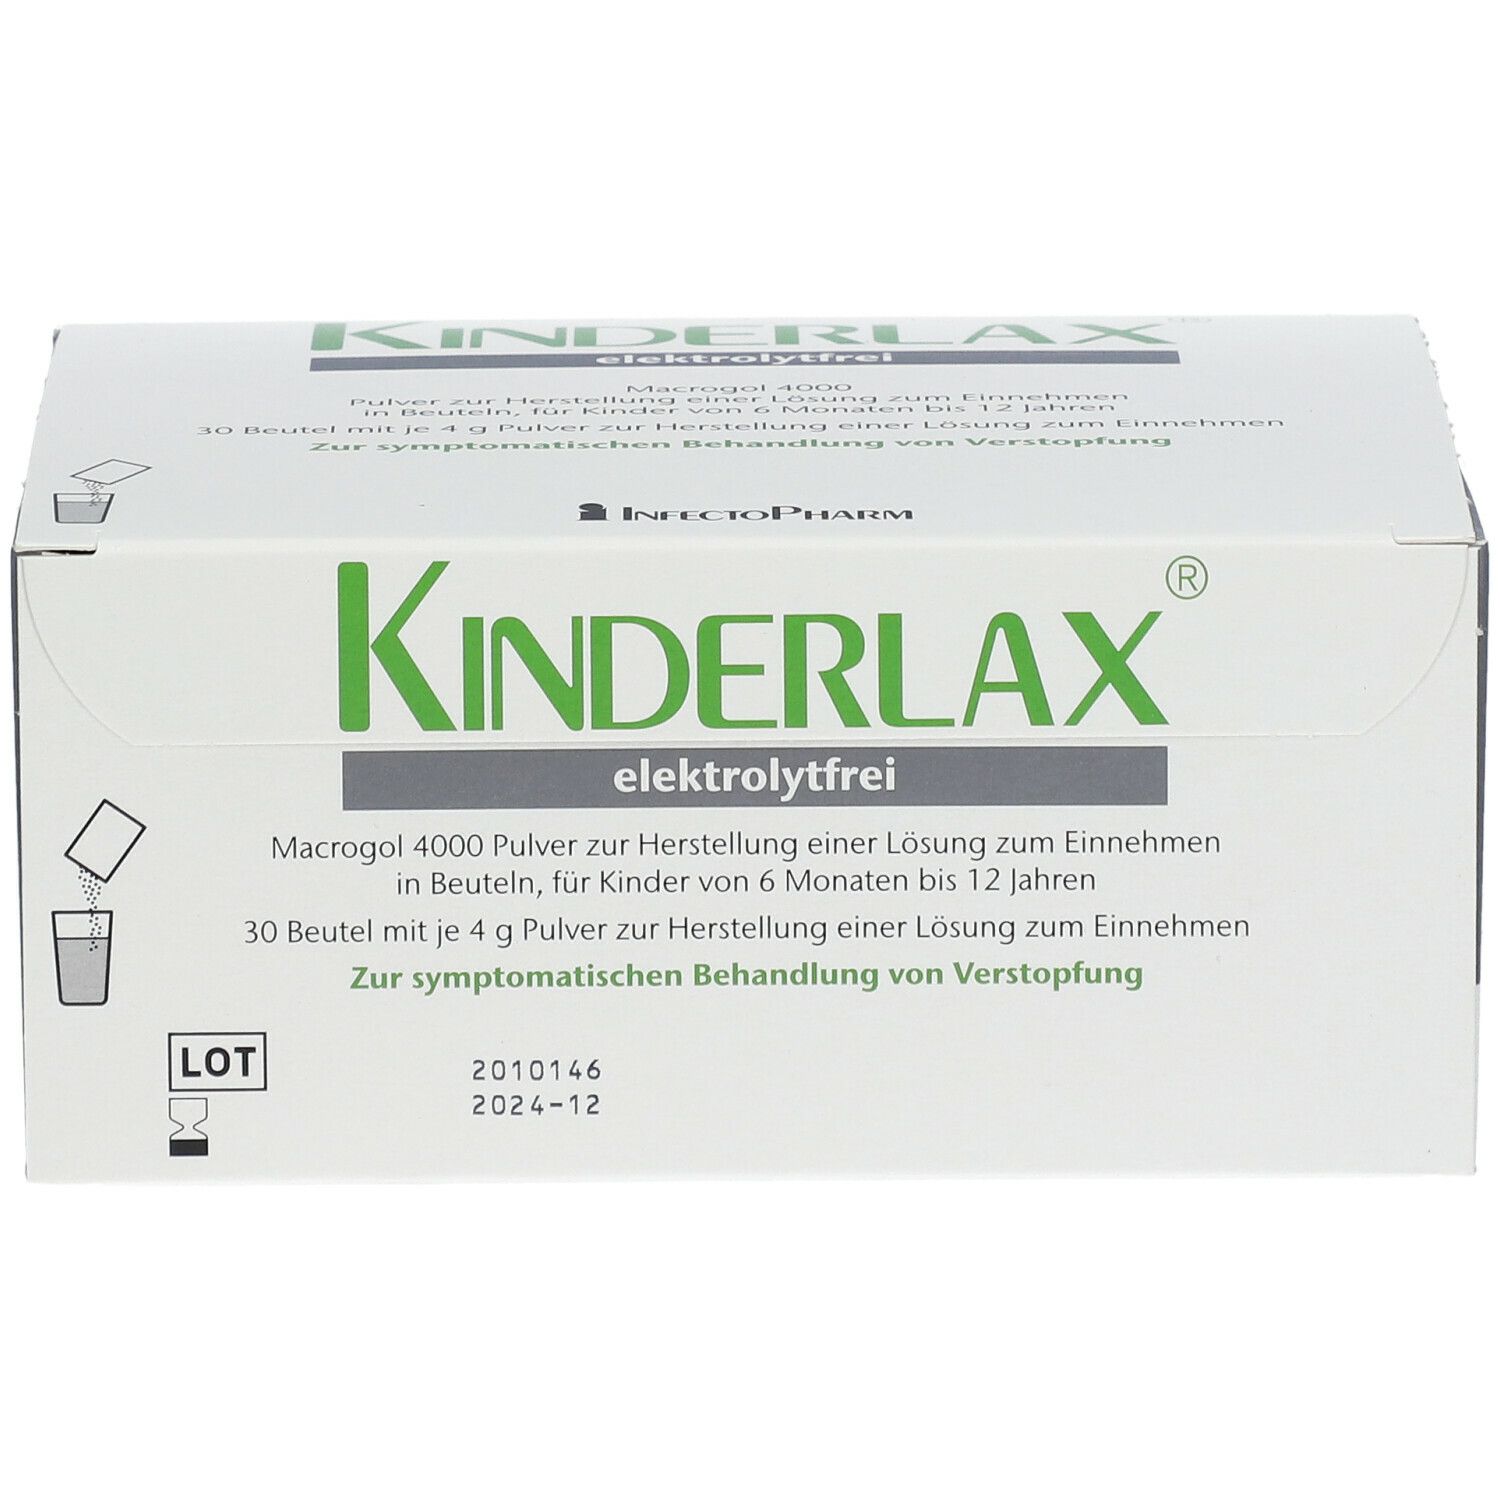 Kinderlax® elektrolytfrei